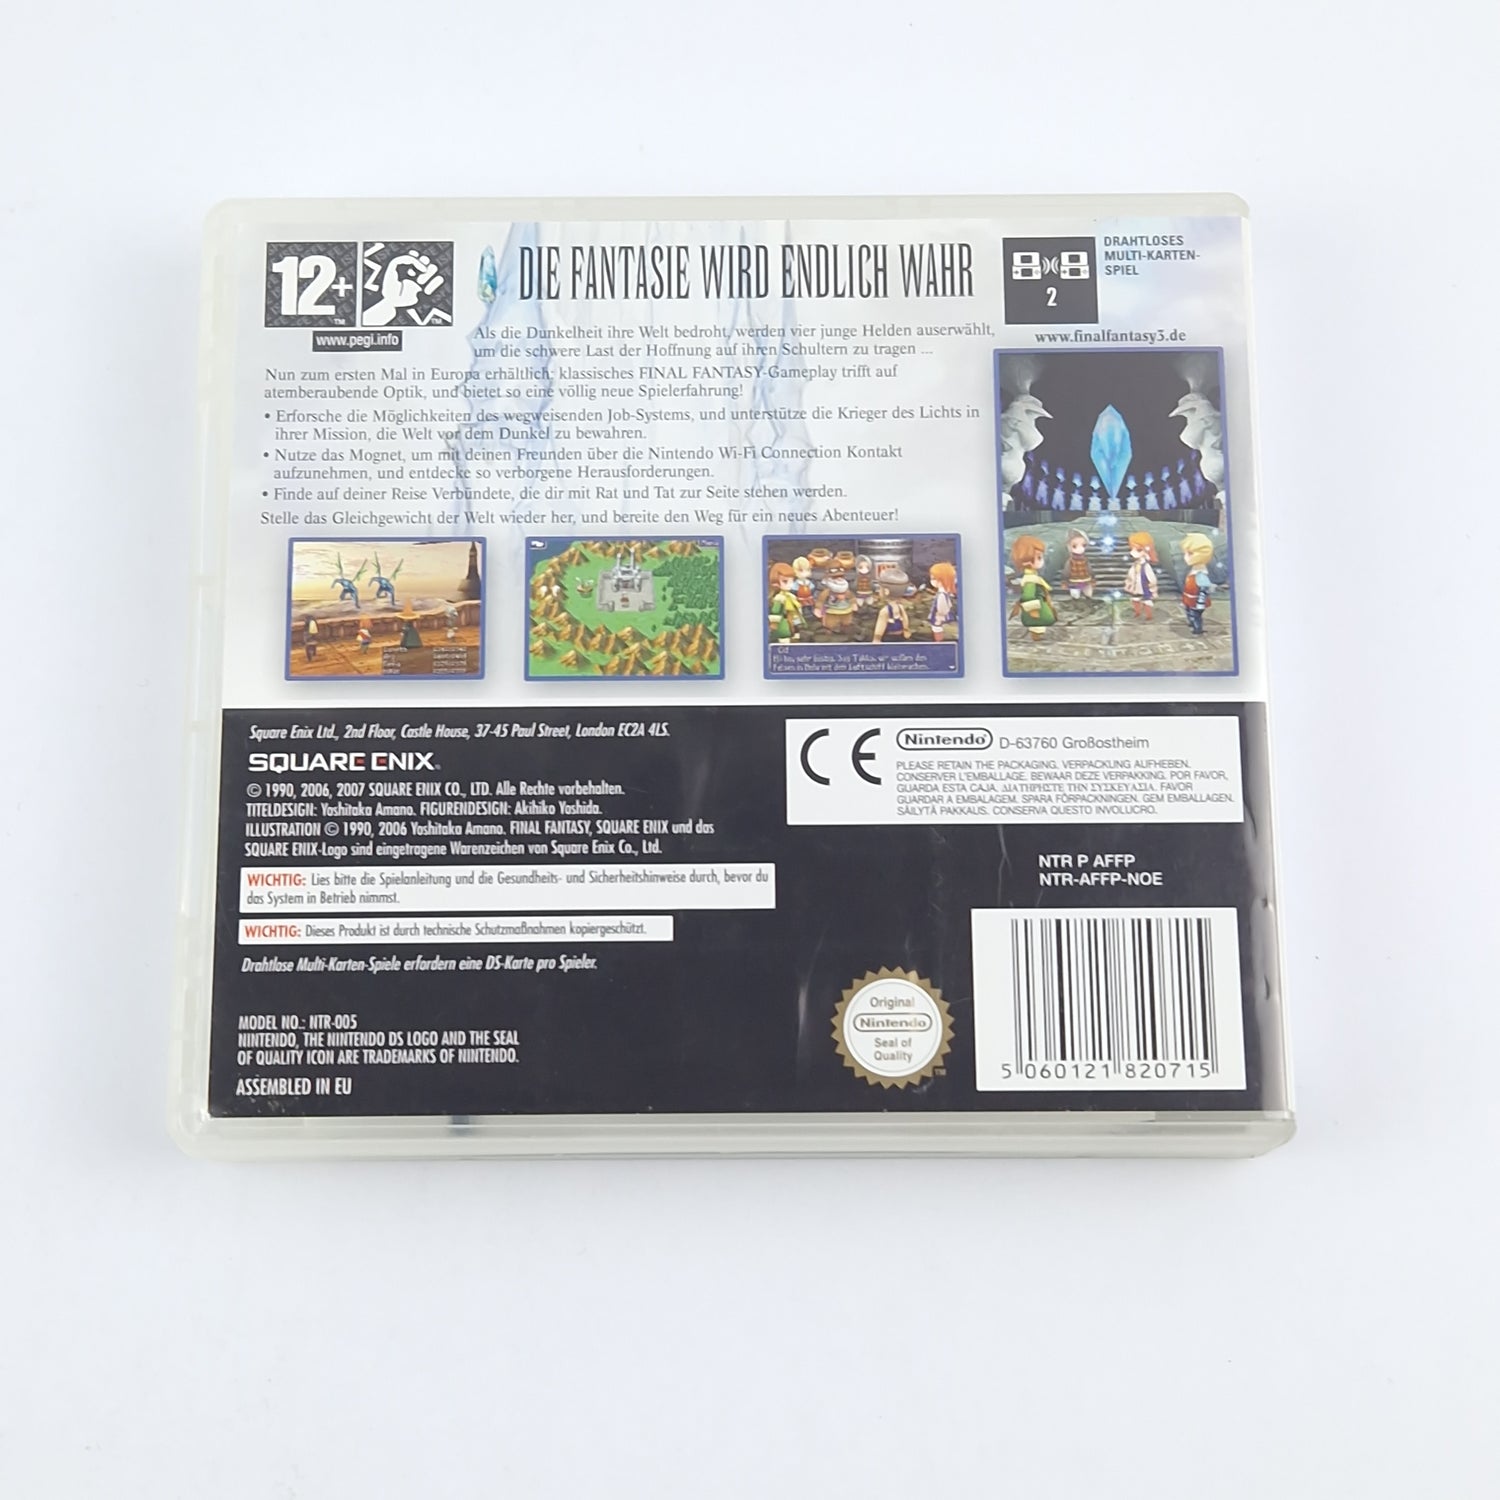 Nintendo DS Spiel : Final Fantasy III 3 - OVP Anleitung Modul Square Enix